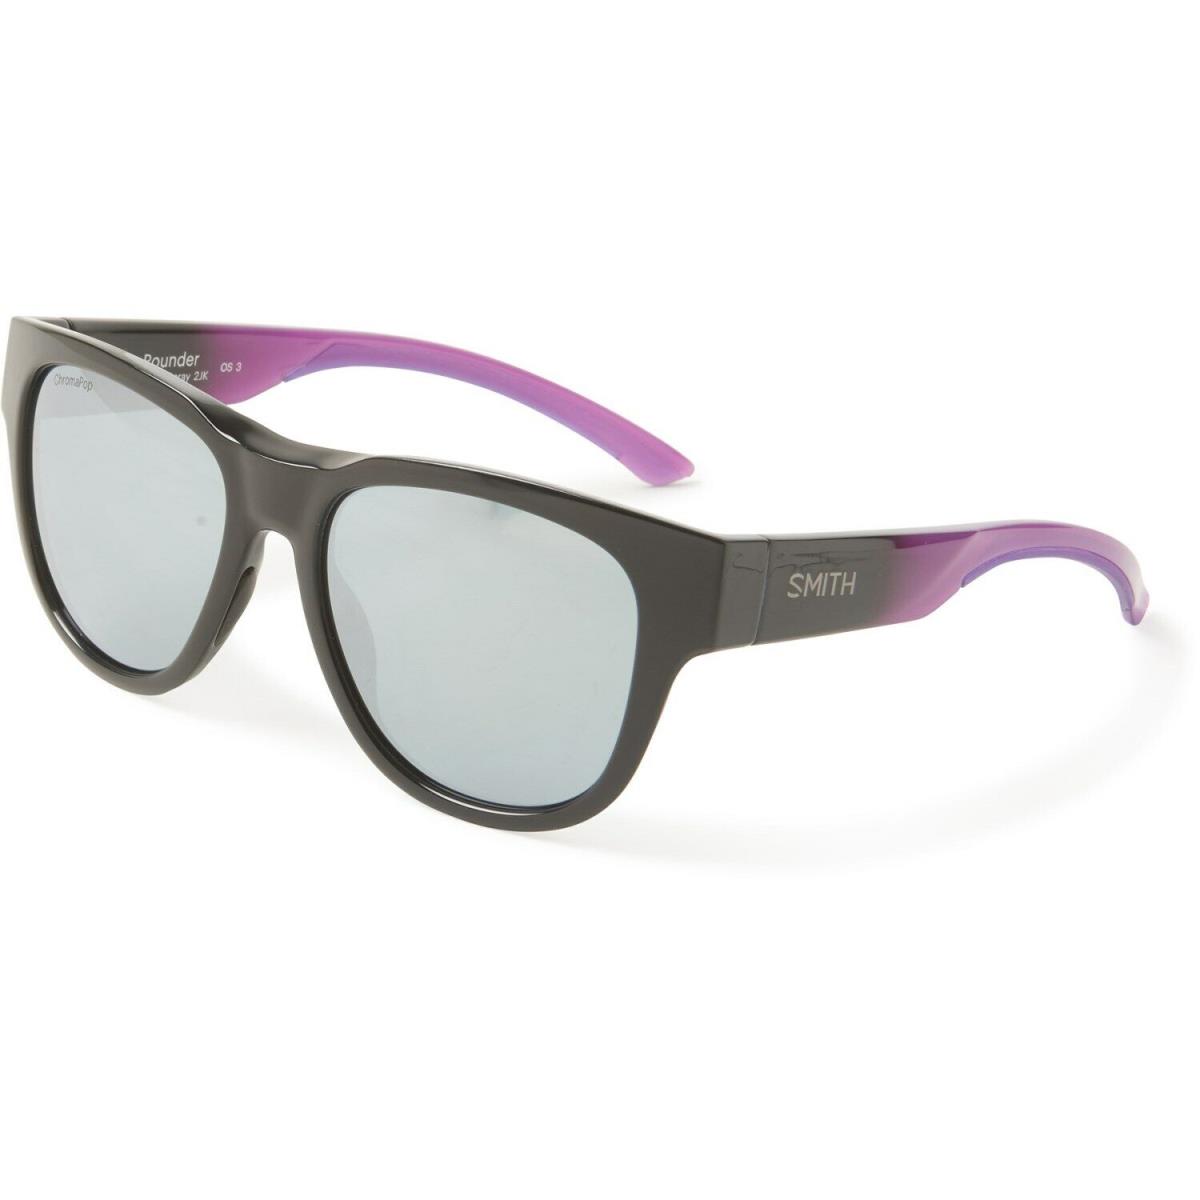 Smith Optics Rounder Sunglasses - Chromapop Lenses